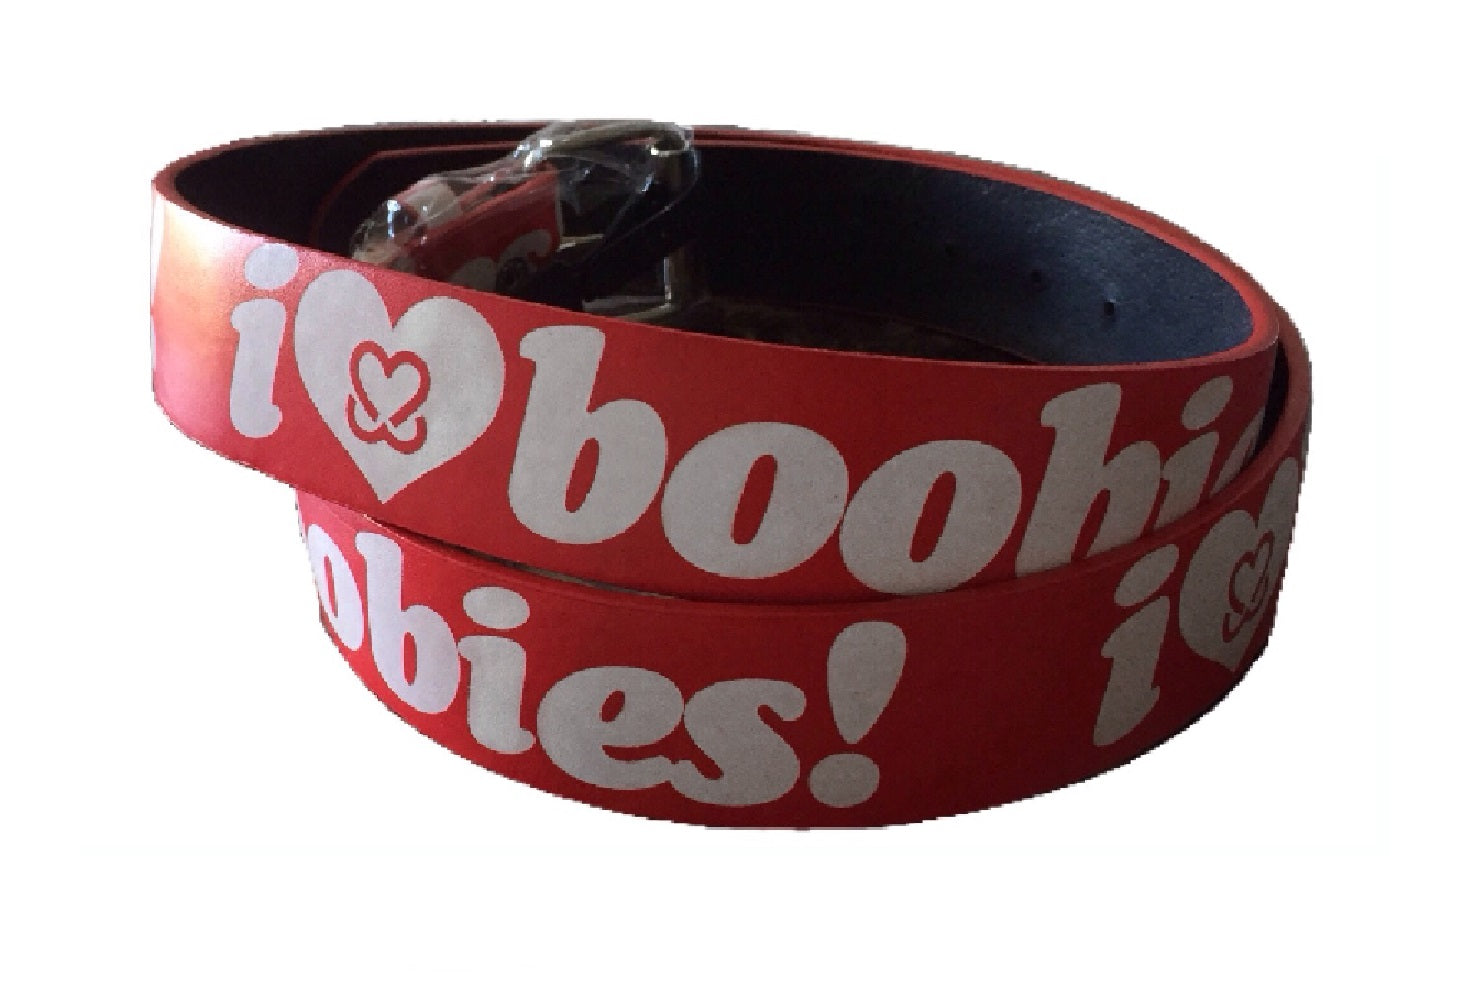 School bans 'I Love Boobies' cancer bracelets | CTV News